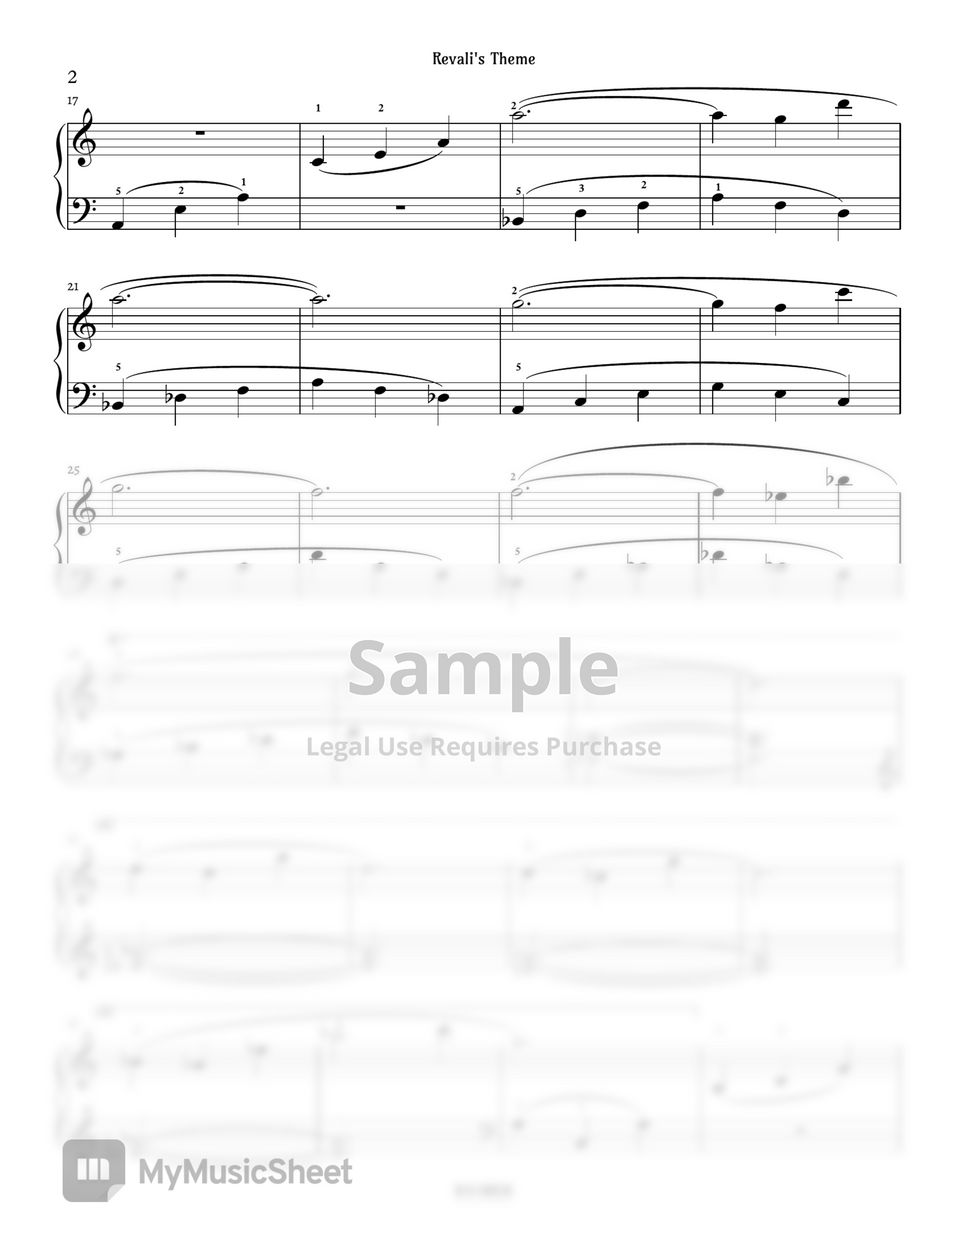 The Legend of Zelda : Breath of the Wild - [Easy] Revali's Theme | Piano Arrangement in C Major + MIDI file (Nintendo) by PianoSSam